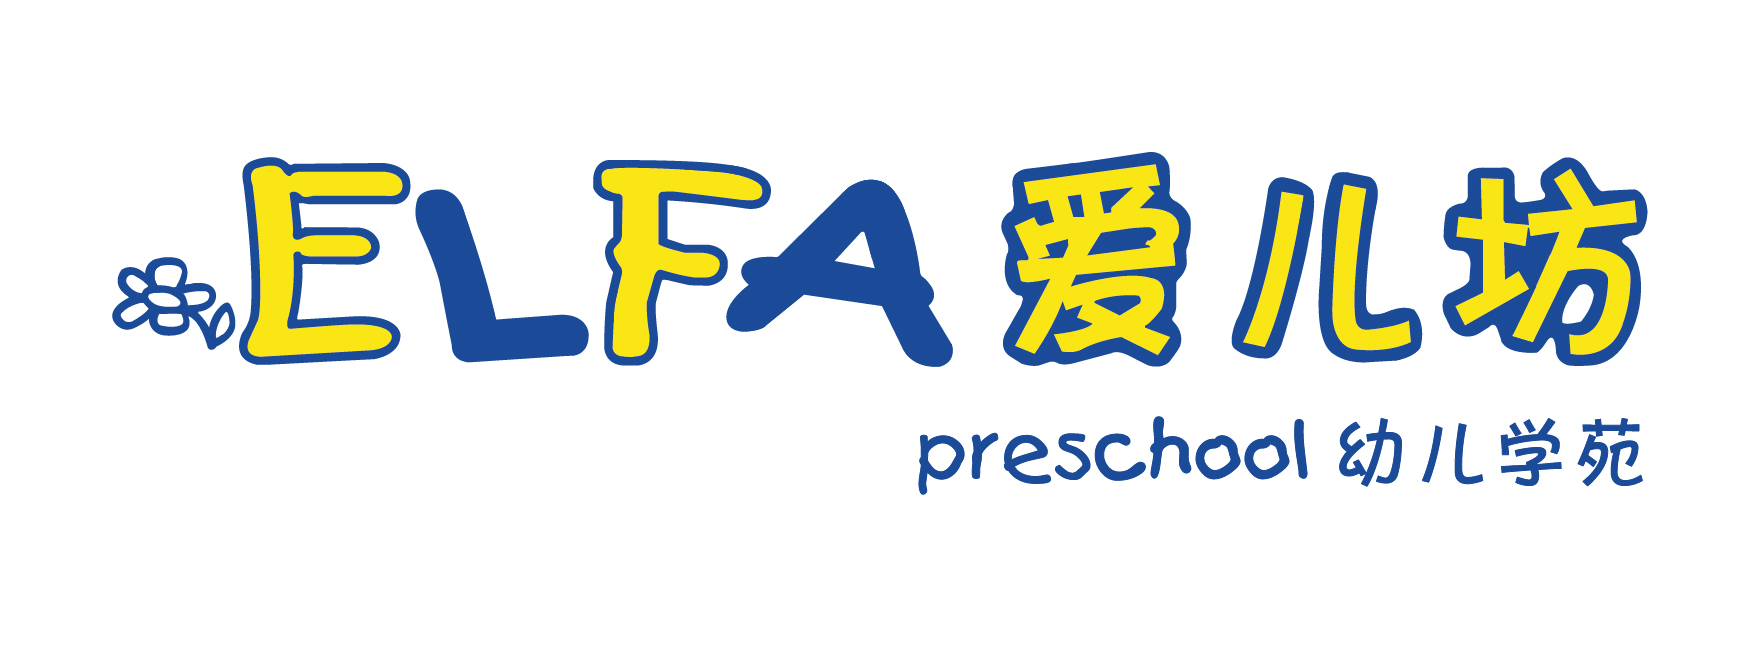 ELFA Chinese Preschool Logo